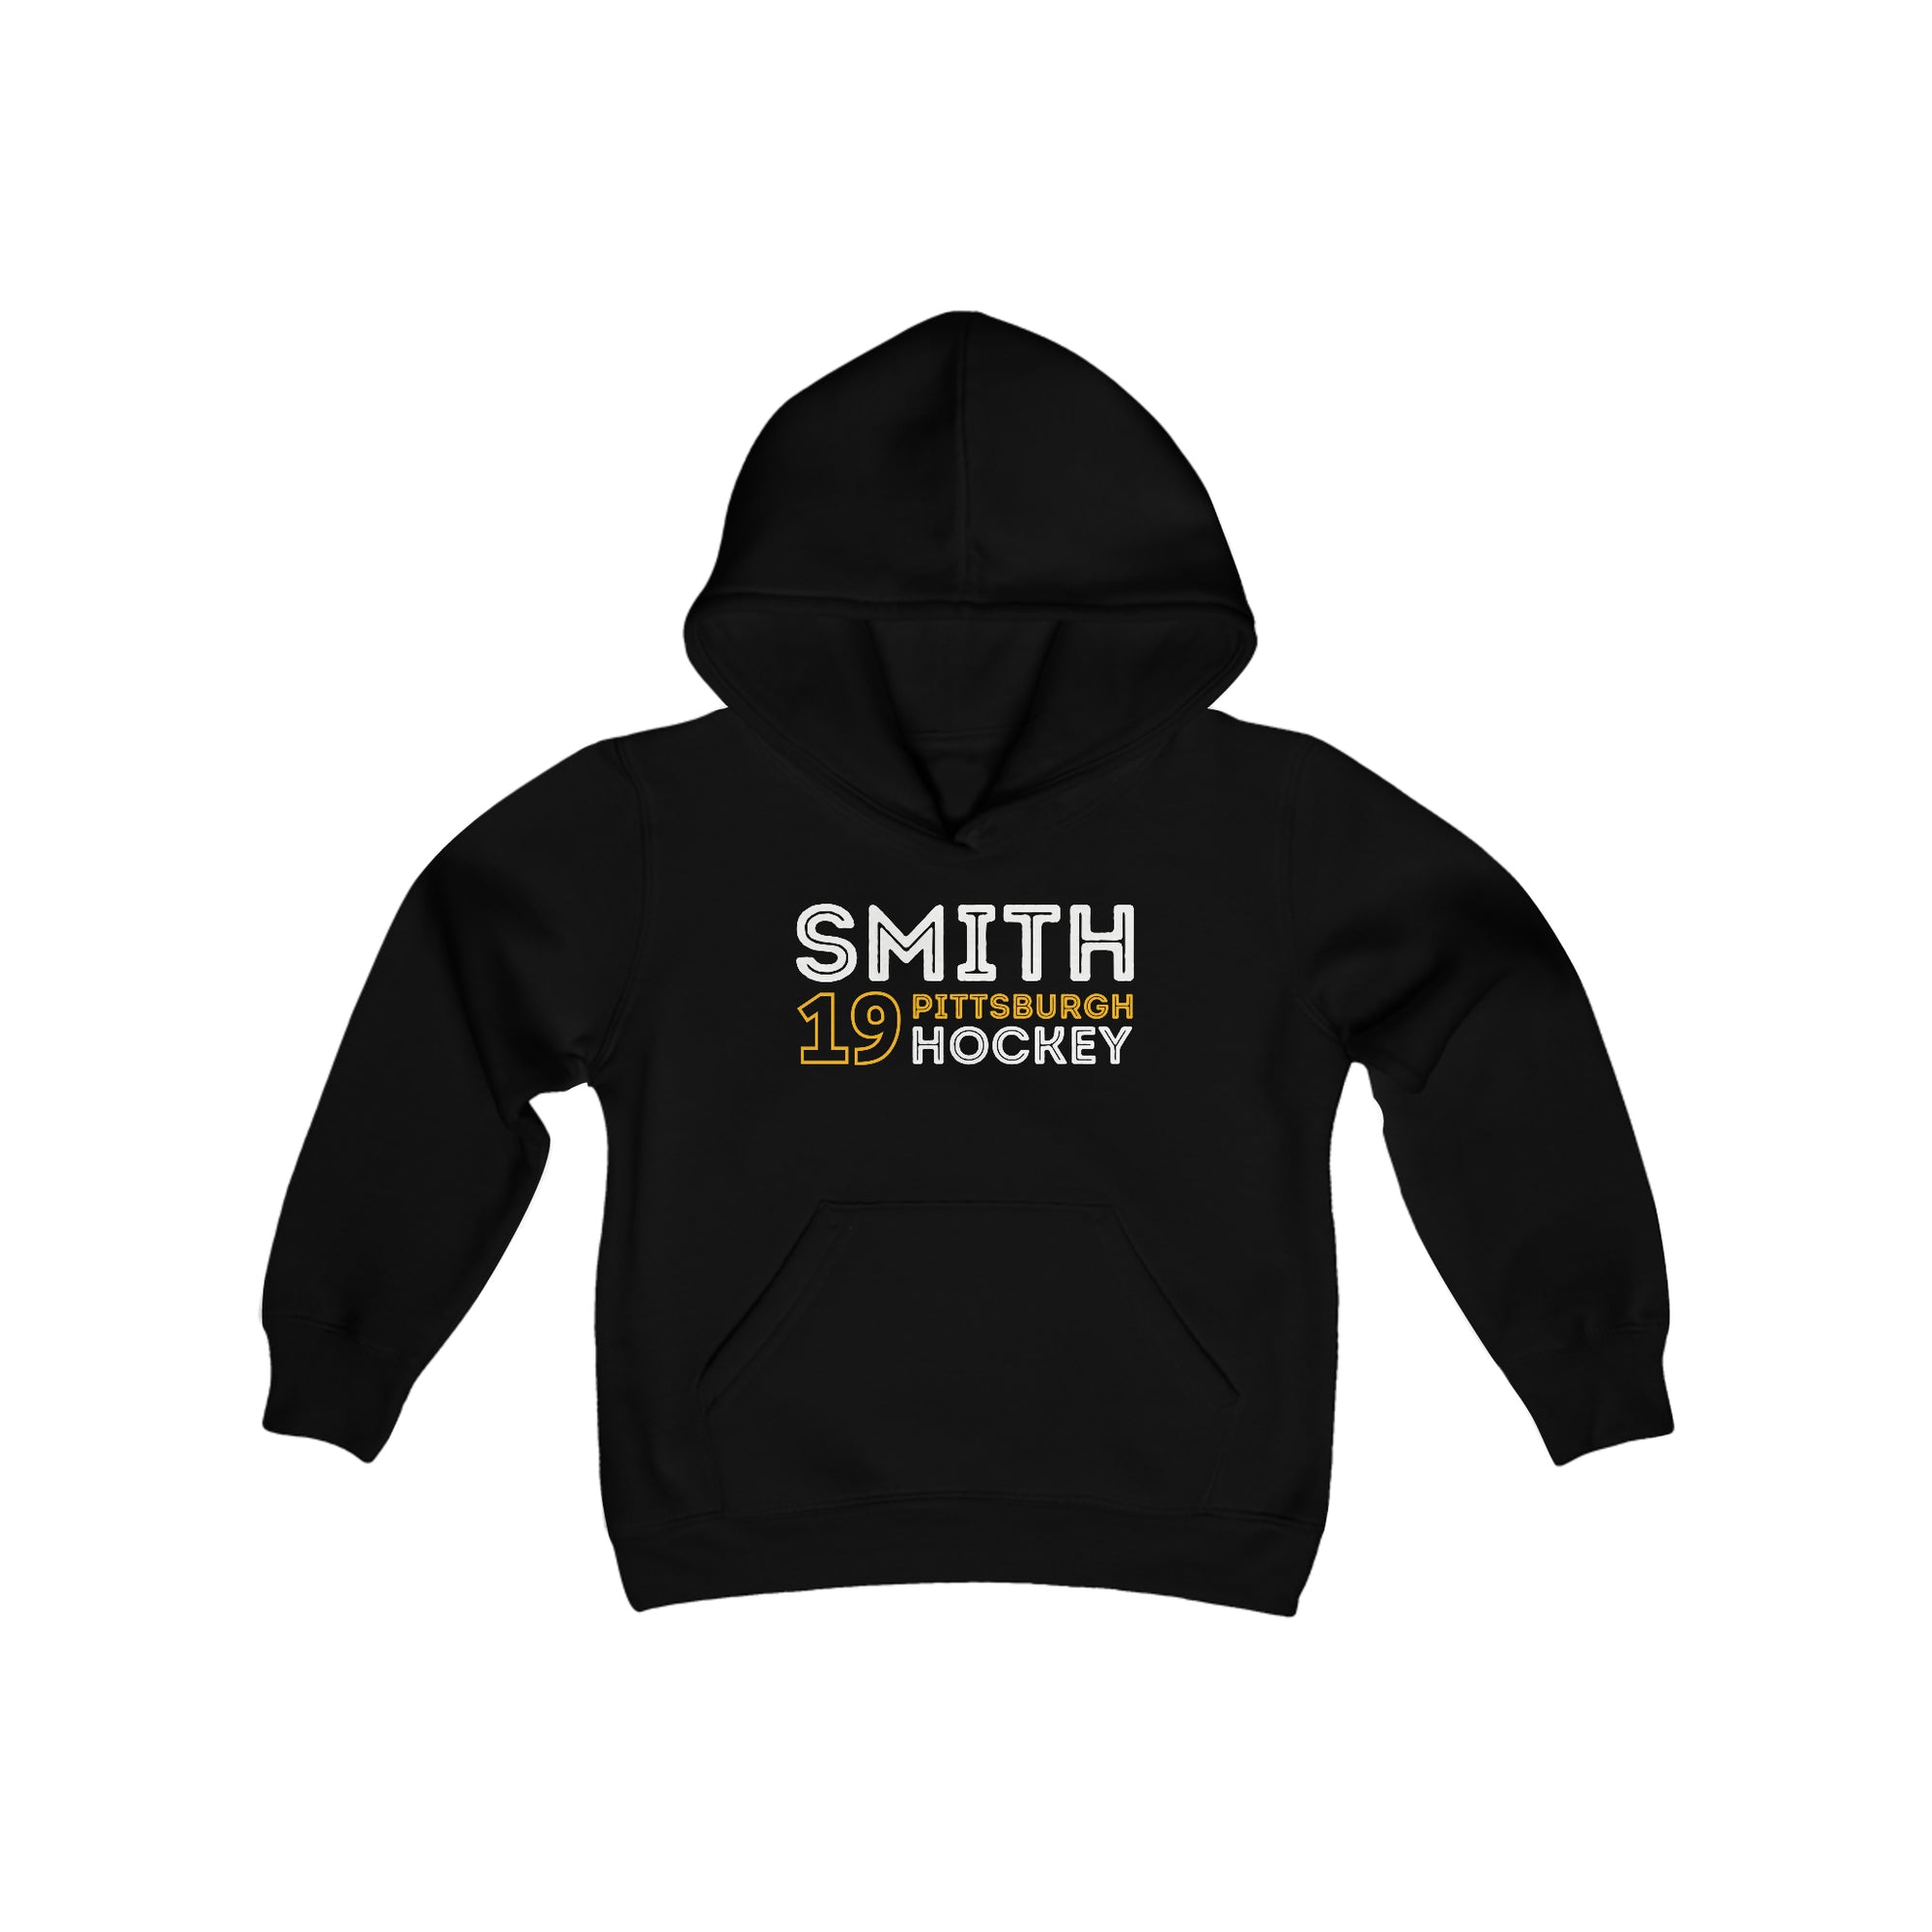 Smith 19 Pittsburgh Hockey Grafitti Wall Design Youth Hooded Sweatshirt